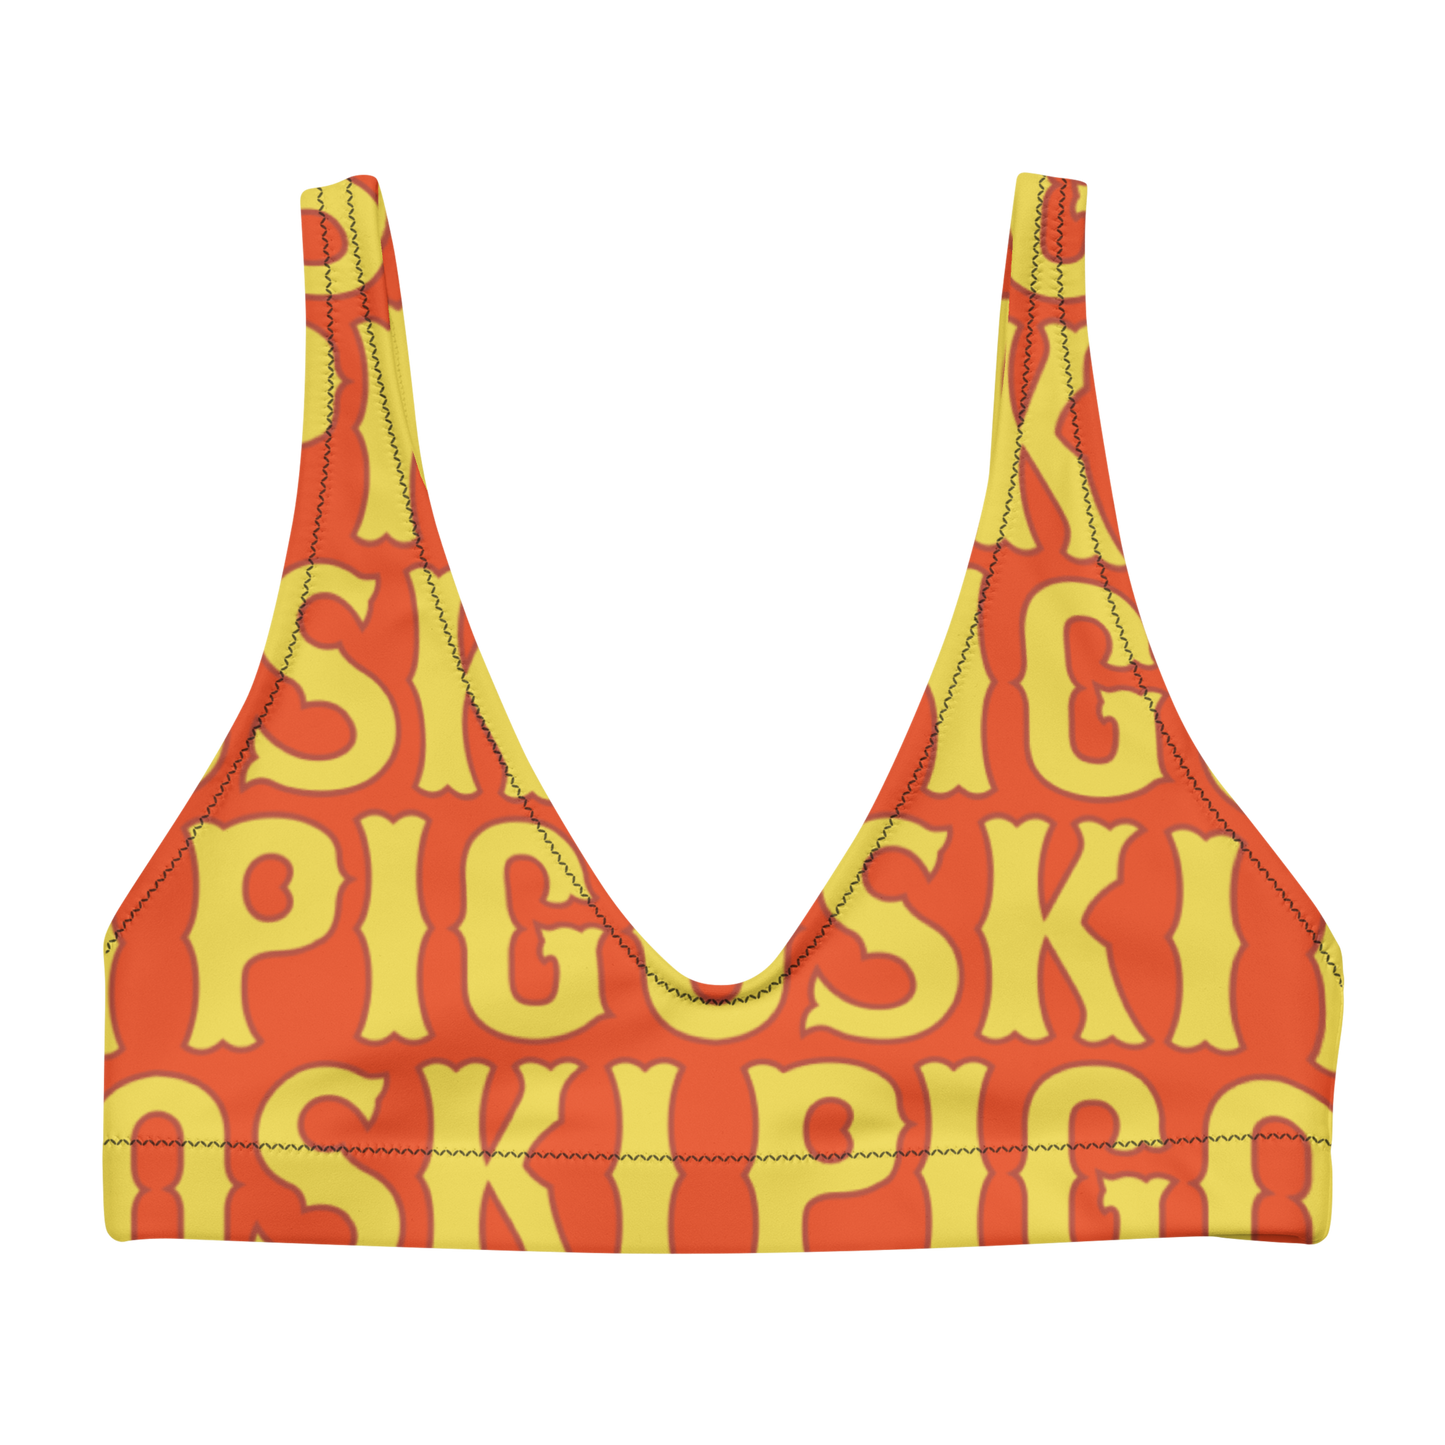 All Over PIGOSKI bikini top